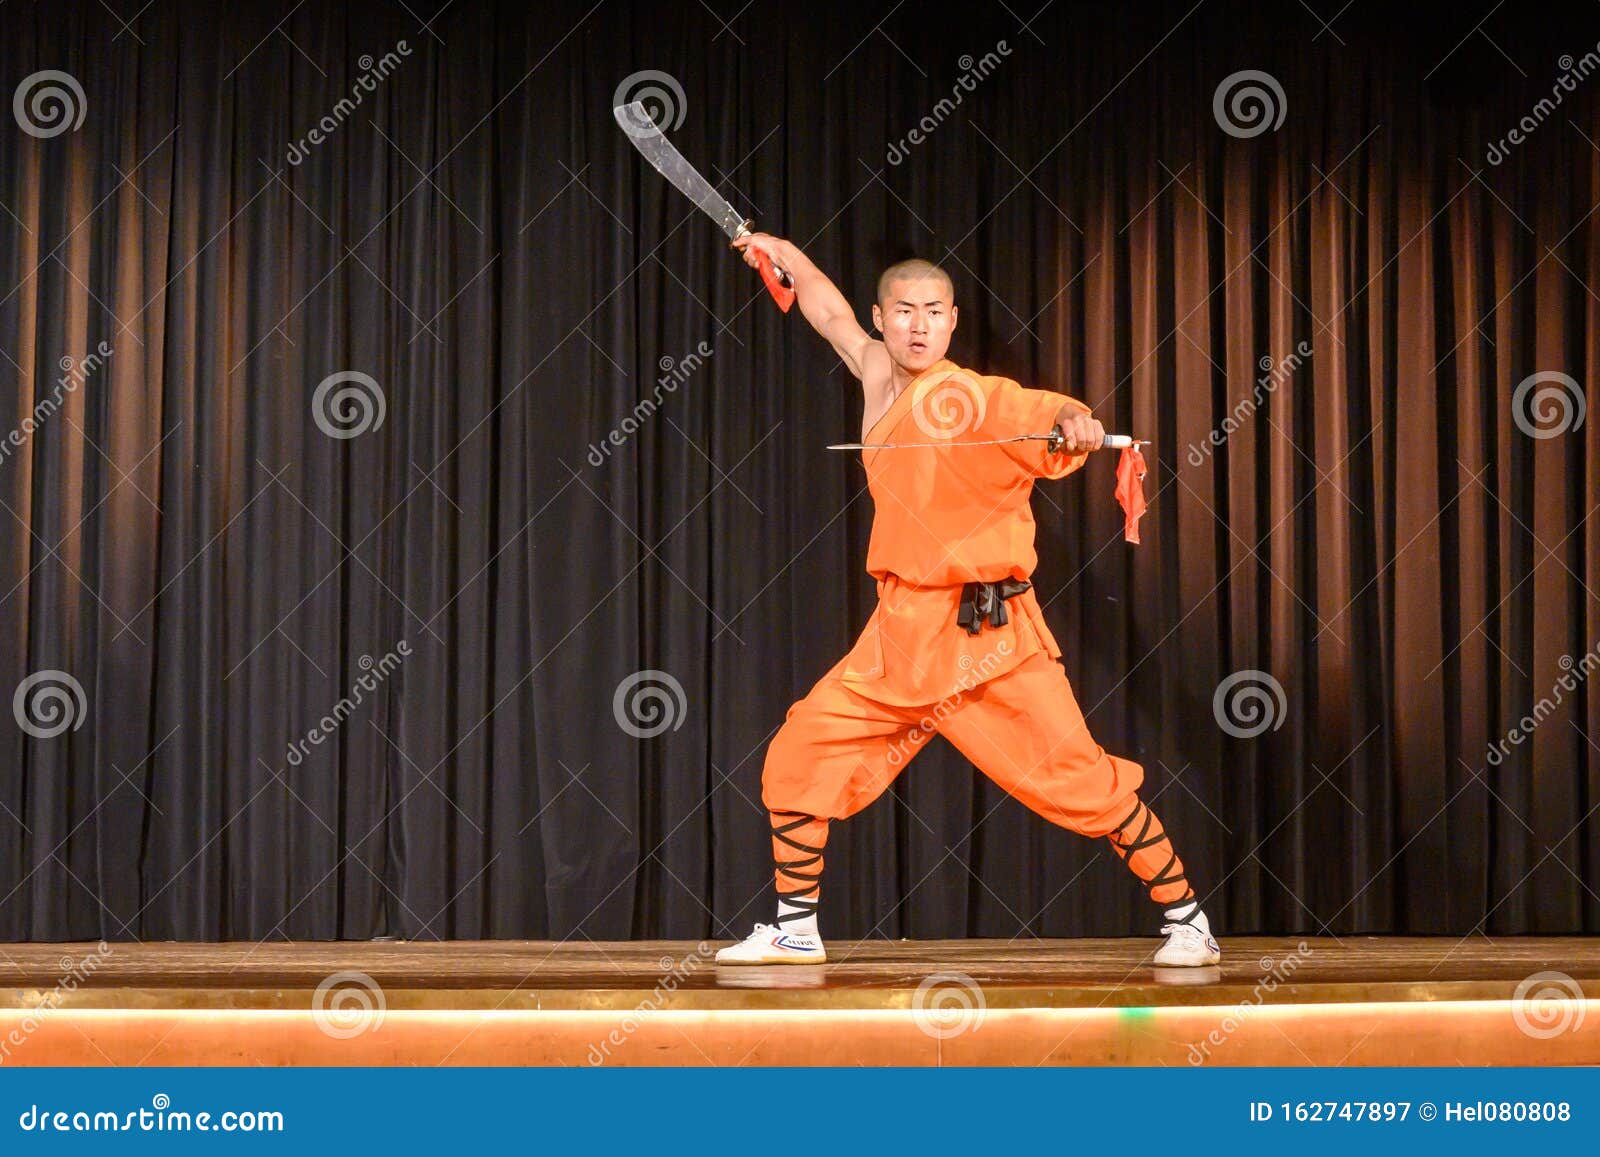 monk magical power show two swords shaolin kung fu show monk performing mental power shaolin kung fu show ho chi 162747897